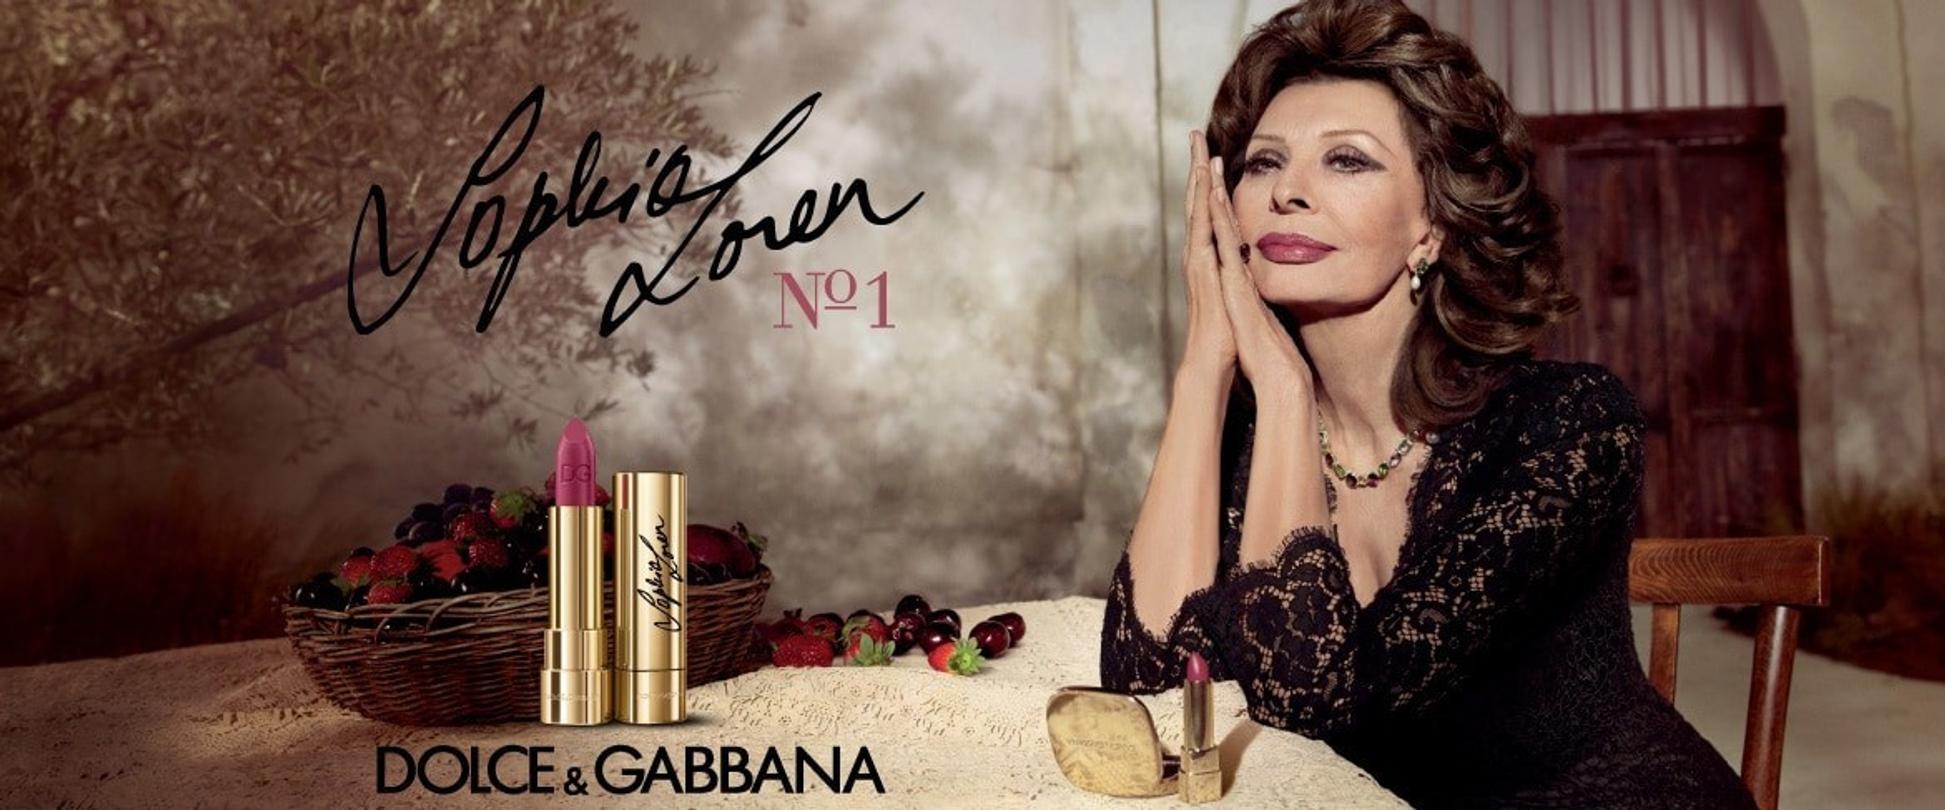 Sophia Loren Dolce Gabbana